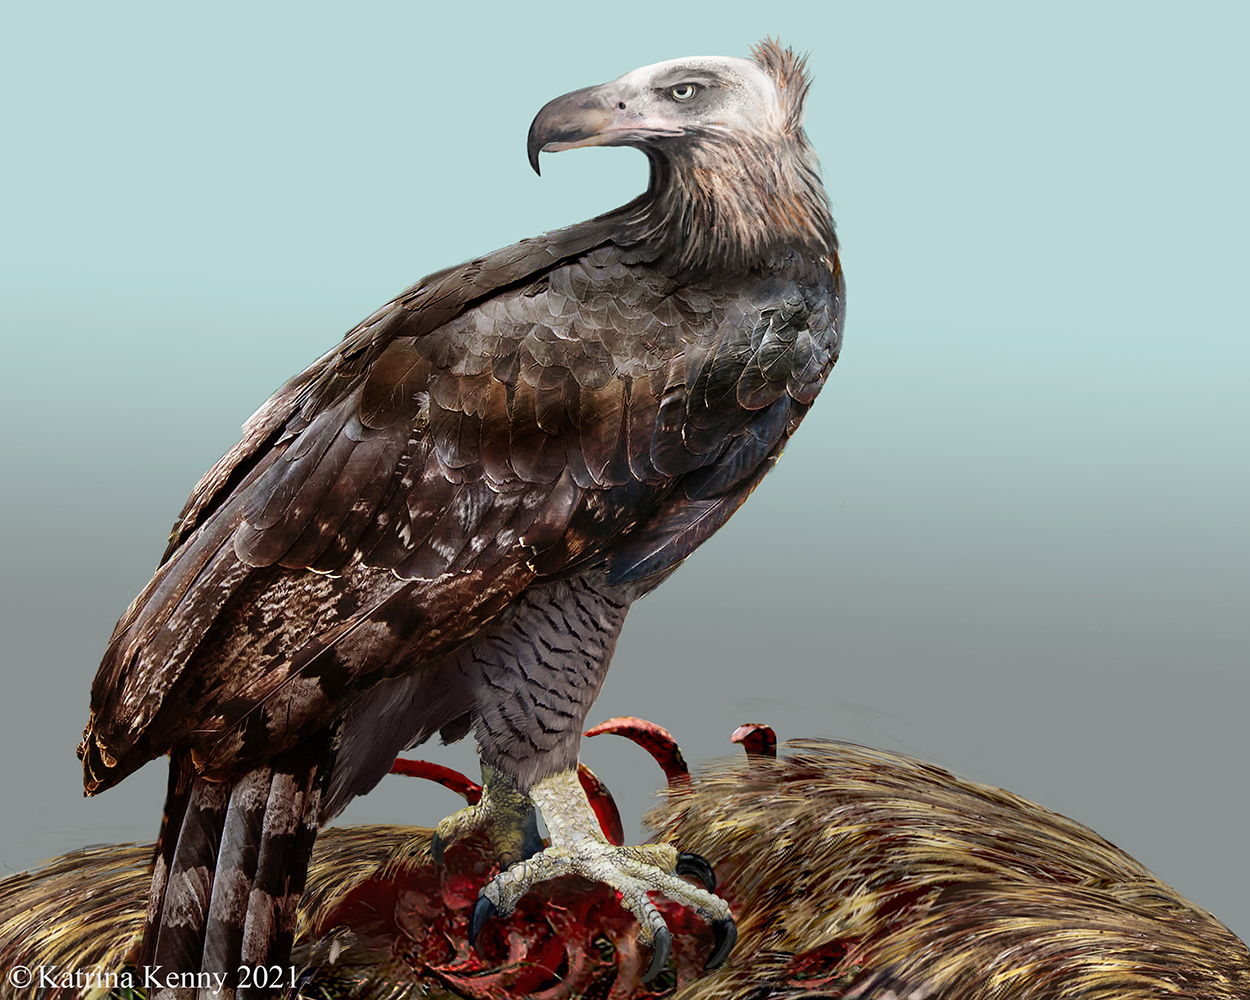 Artist's impression of Haast's Eagle. Image: Katrina Kenny